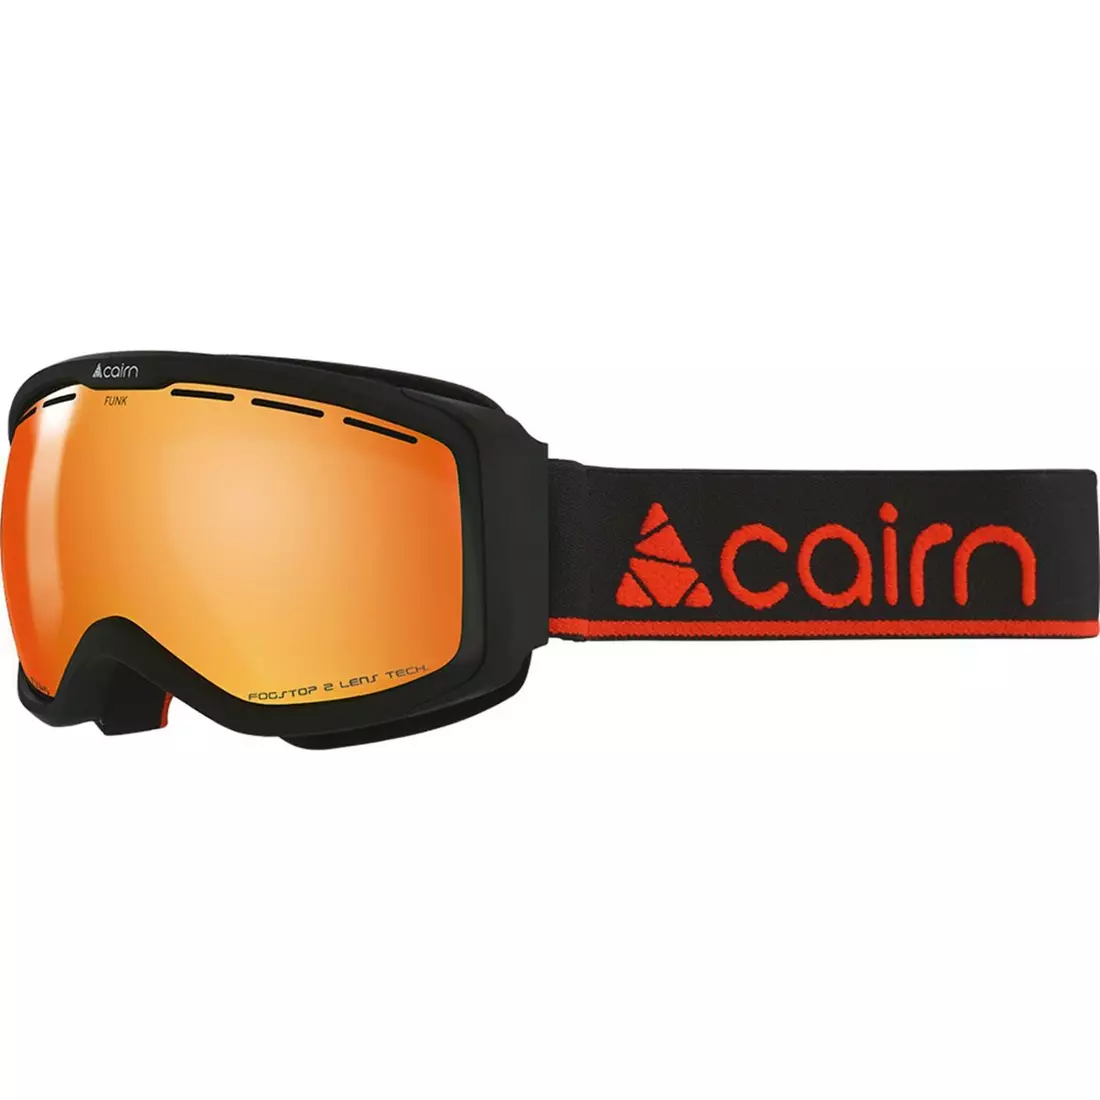 CAIRN gogle narciarskie/snowboardowe juniorskie FUNK OTG SPX3000 IUM Mat Black Orange 